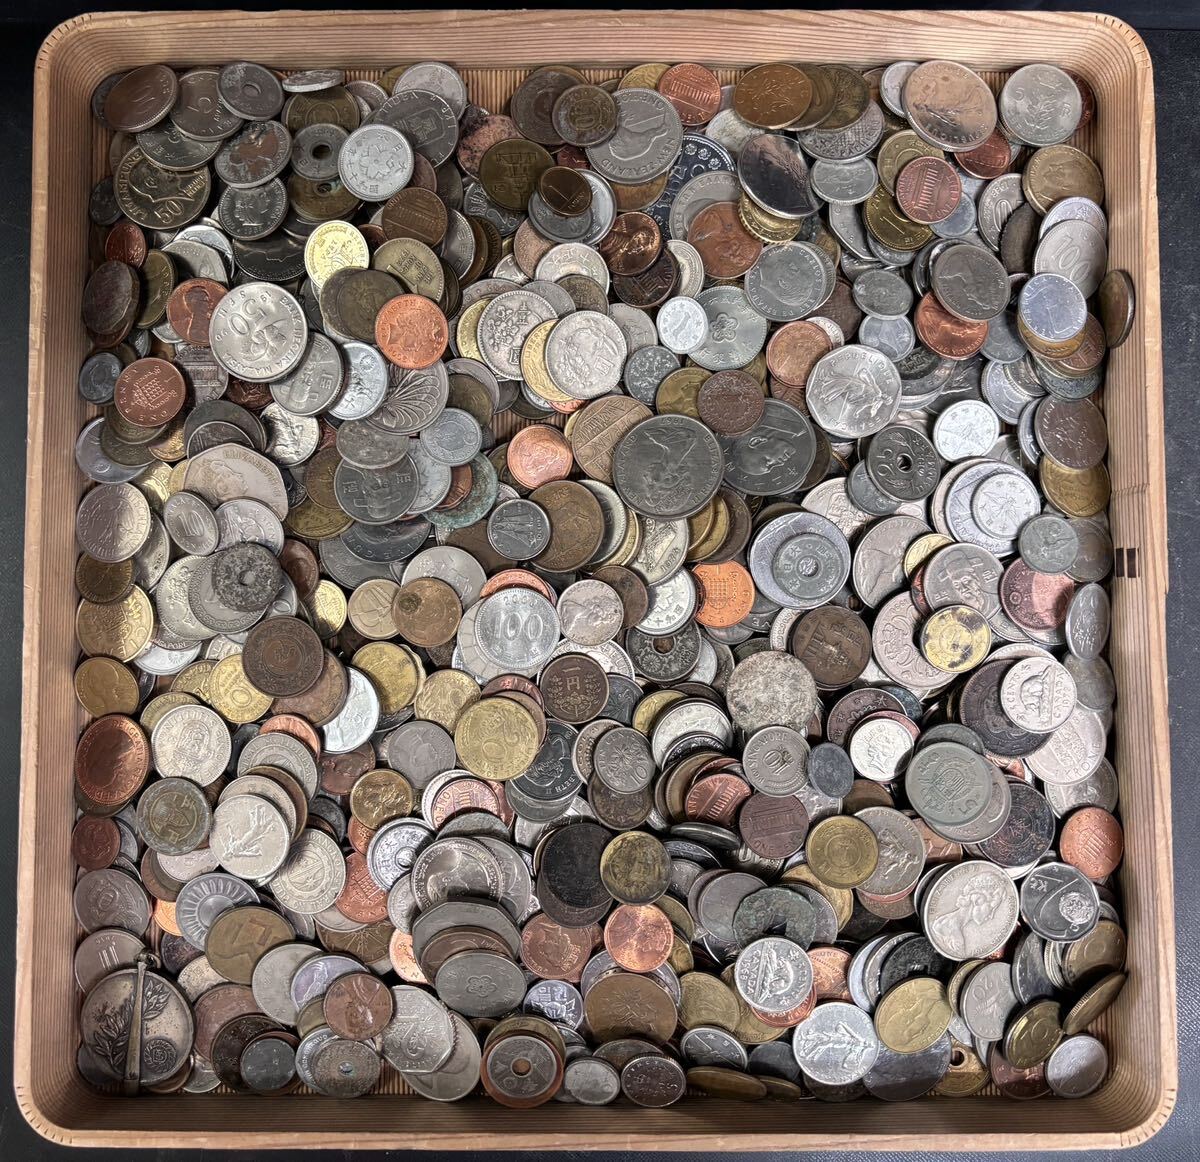 S4199 古美術 古銭 硬貨 貨幣 硬幣 外国銭 世界コイン 大量まとめ 約3.52kg アンティークの画像1